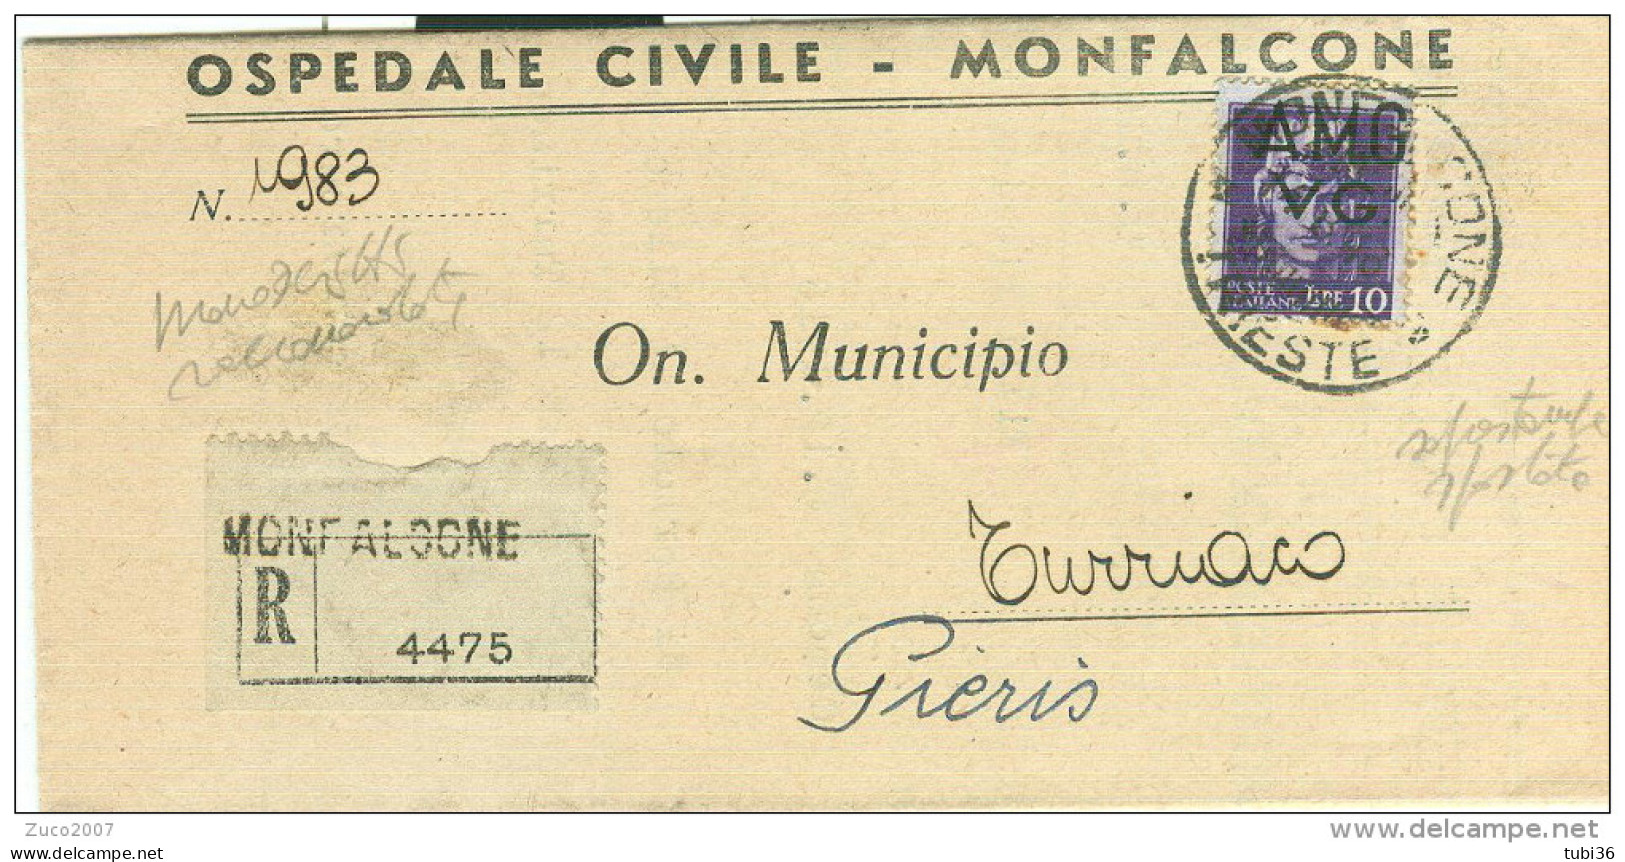 AMG-VG, IMP. £.10,VARIETA SOPRASTAMPA SPOSTATA ISOLATO IN TARIFFA MANO. RACC., 1946, POSTE MONFALCONE -PIERIS, TRIESTE - Marcofilie